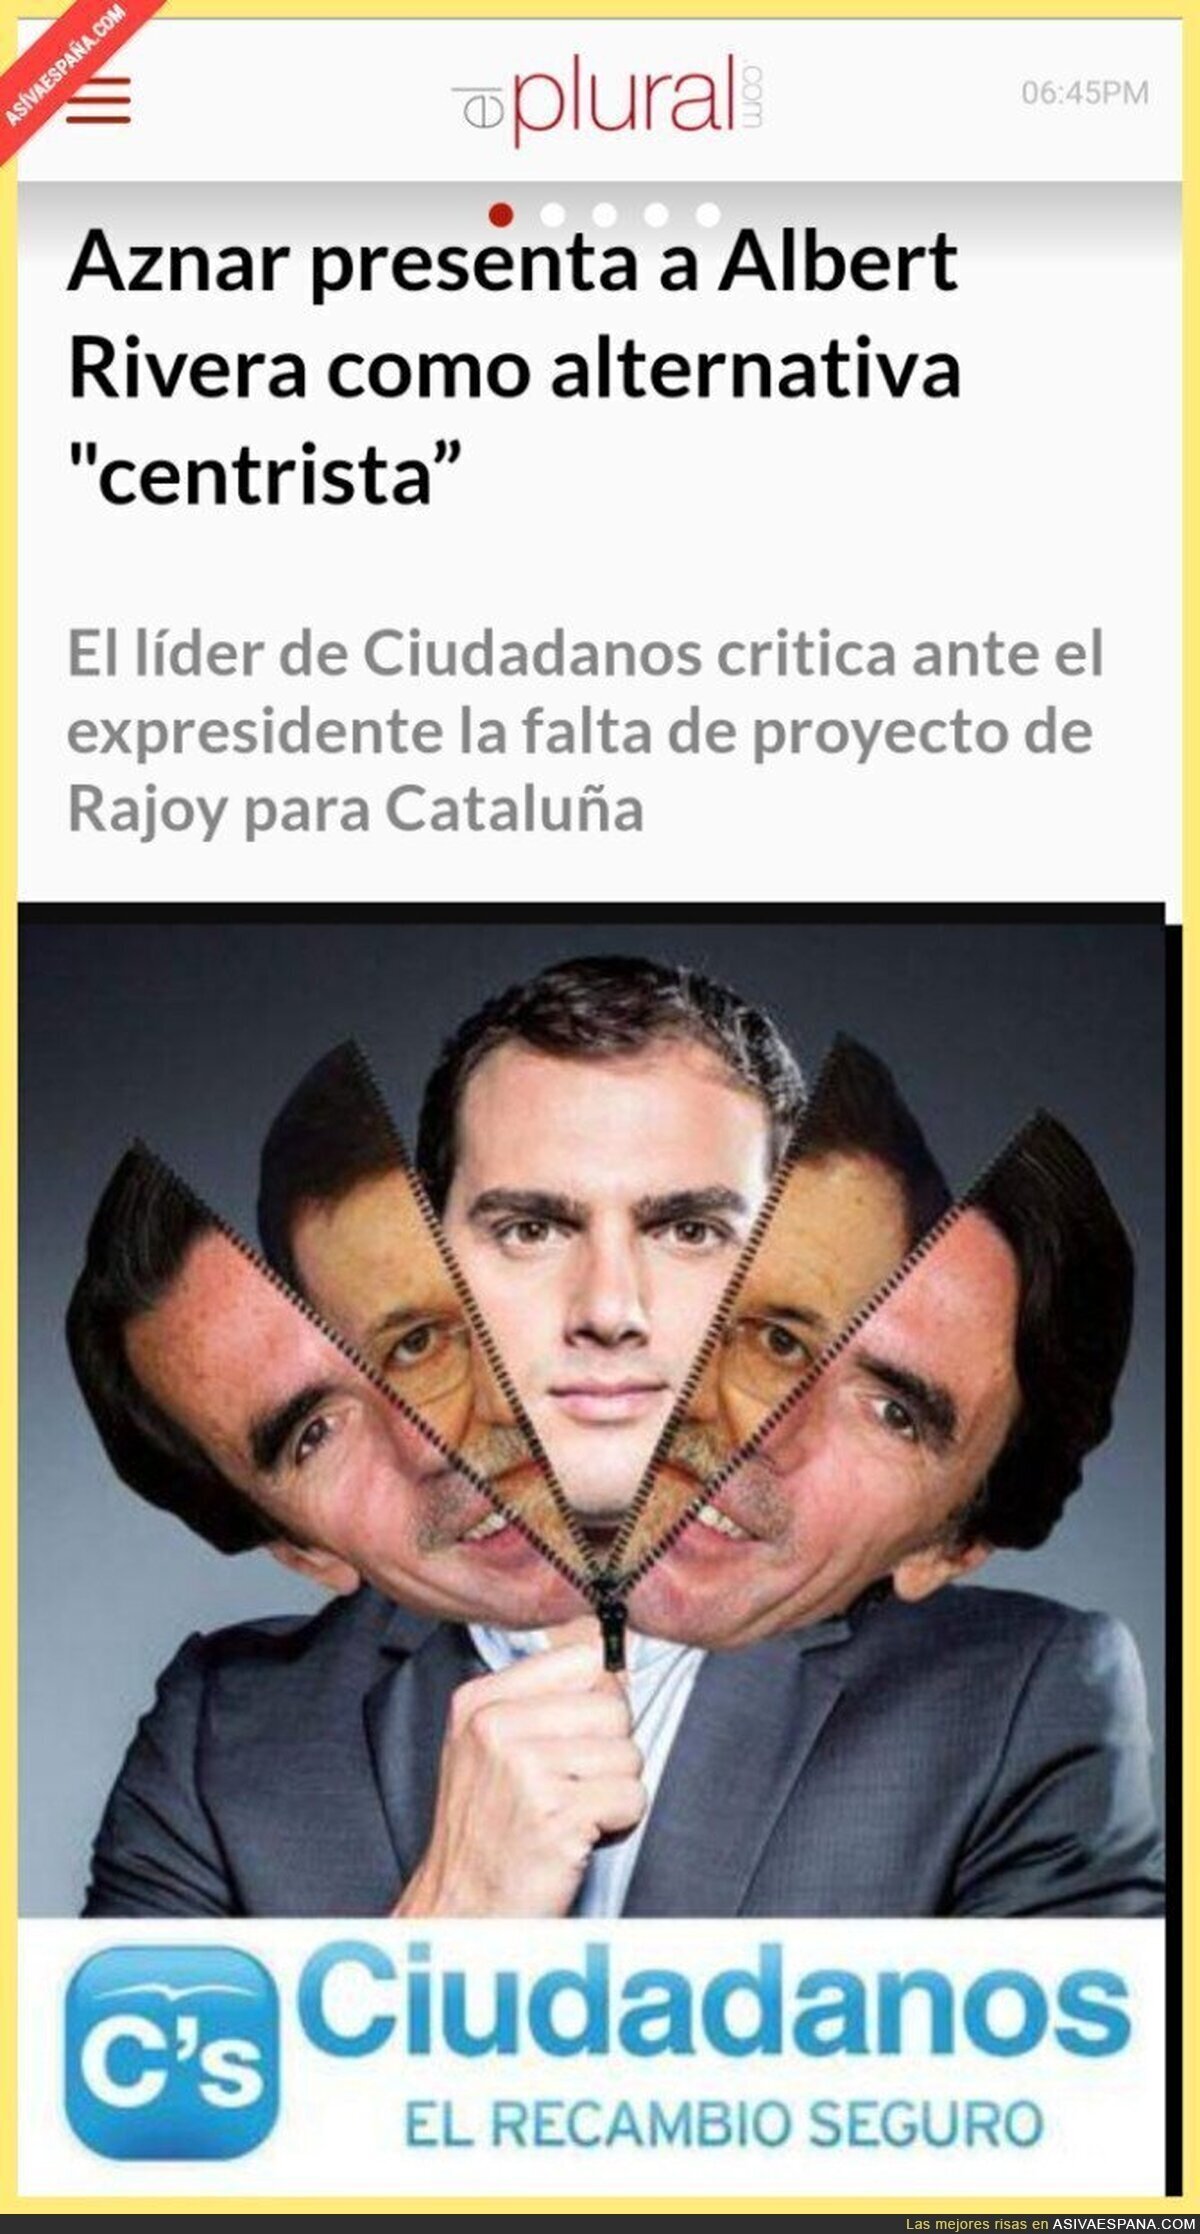 Aznar ya tiene sucesor